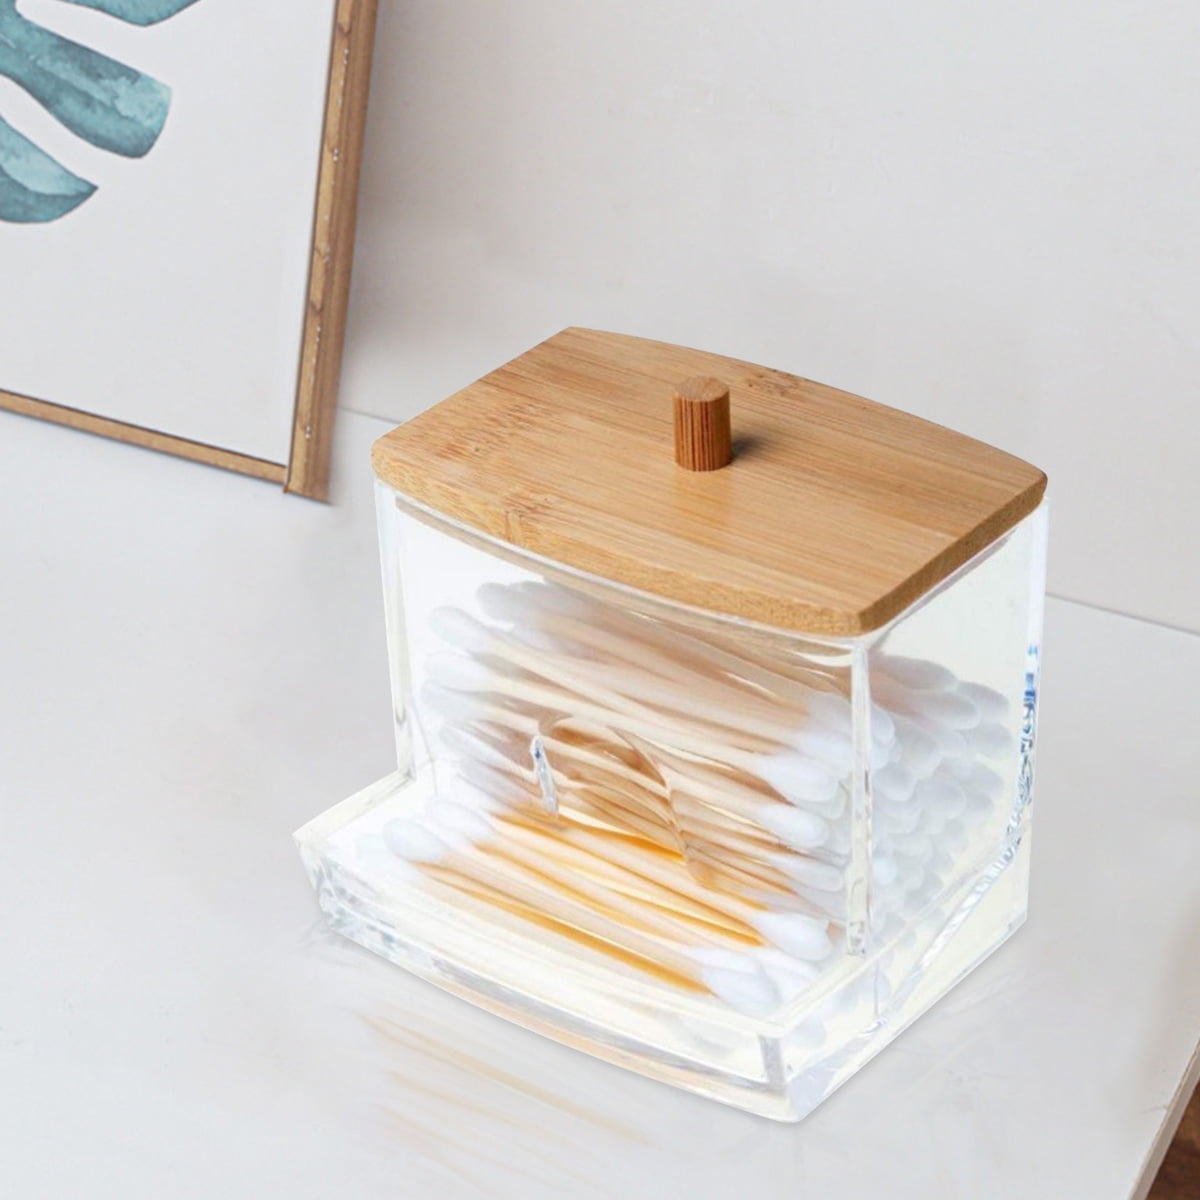 Qtip Holder Dispenser Set With Bamboo Lids Bathroom - Temu